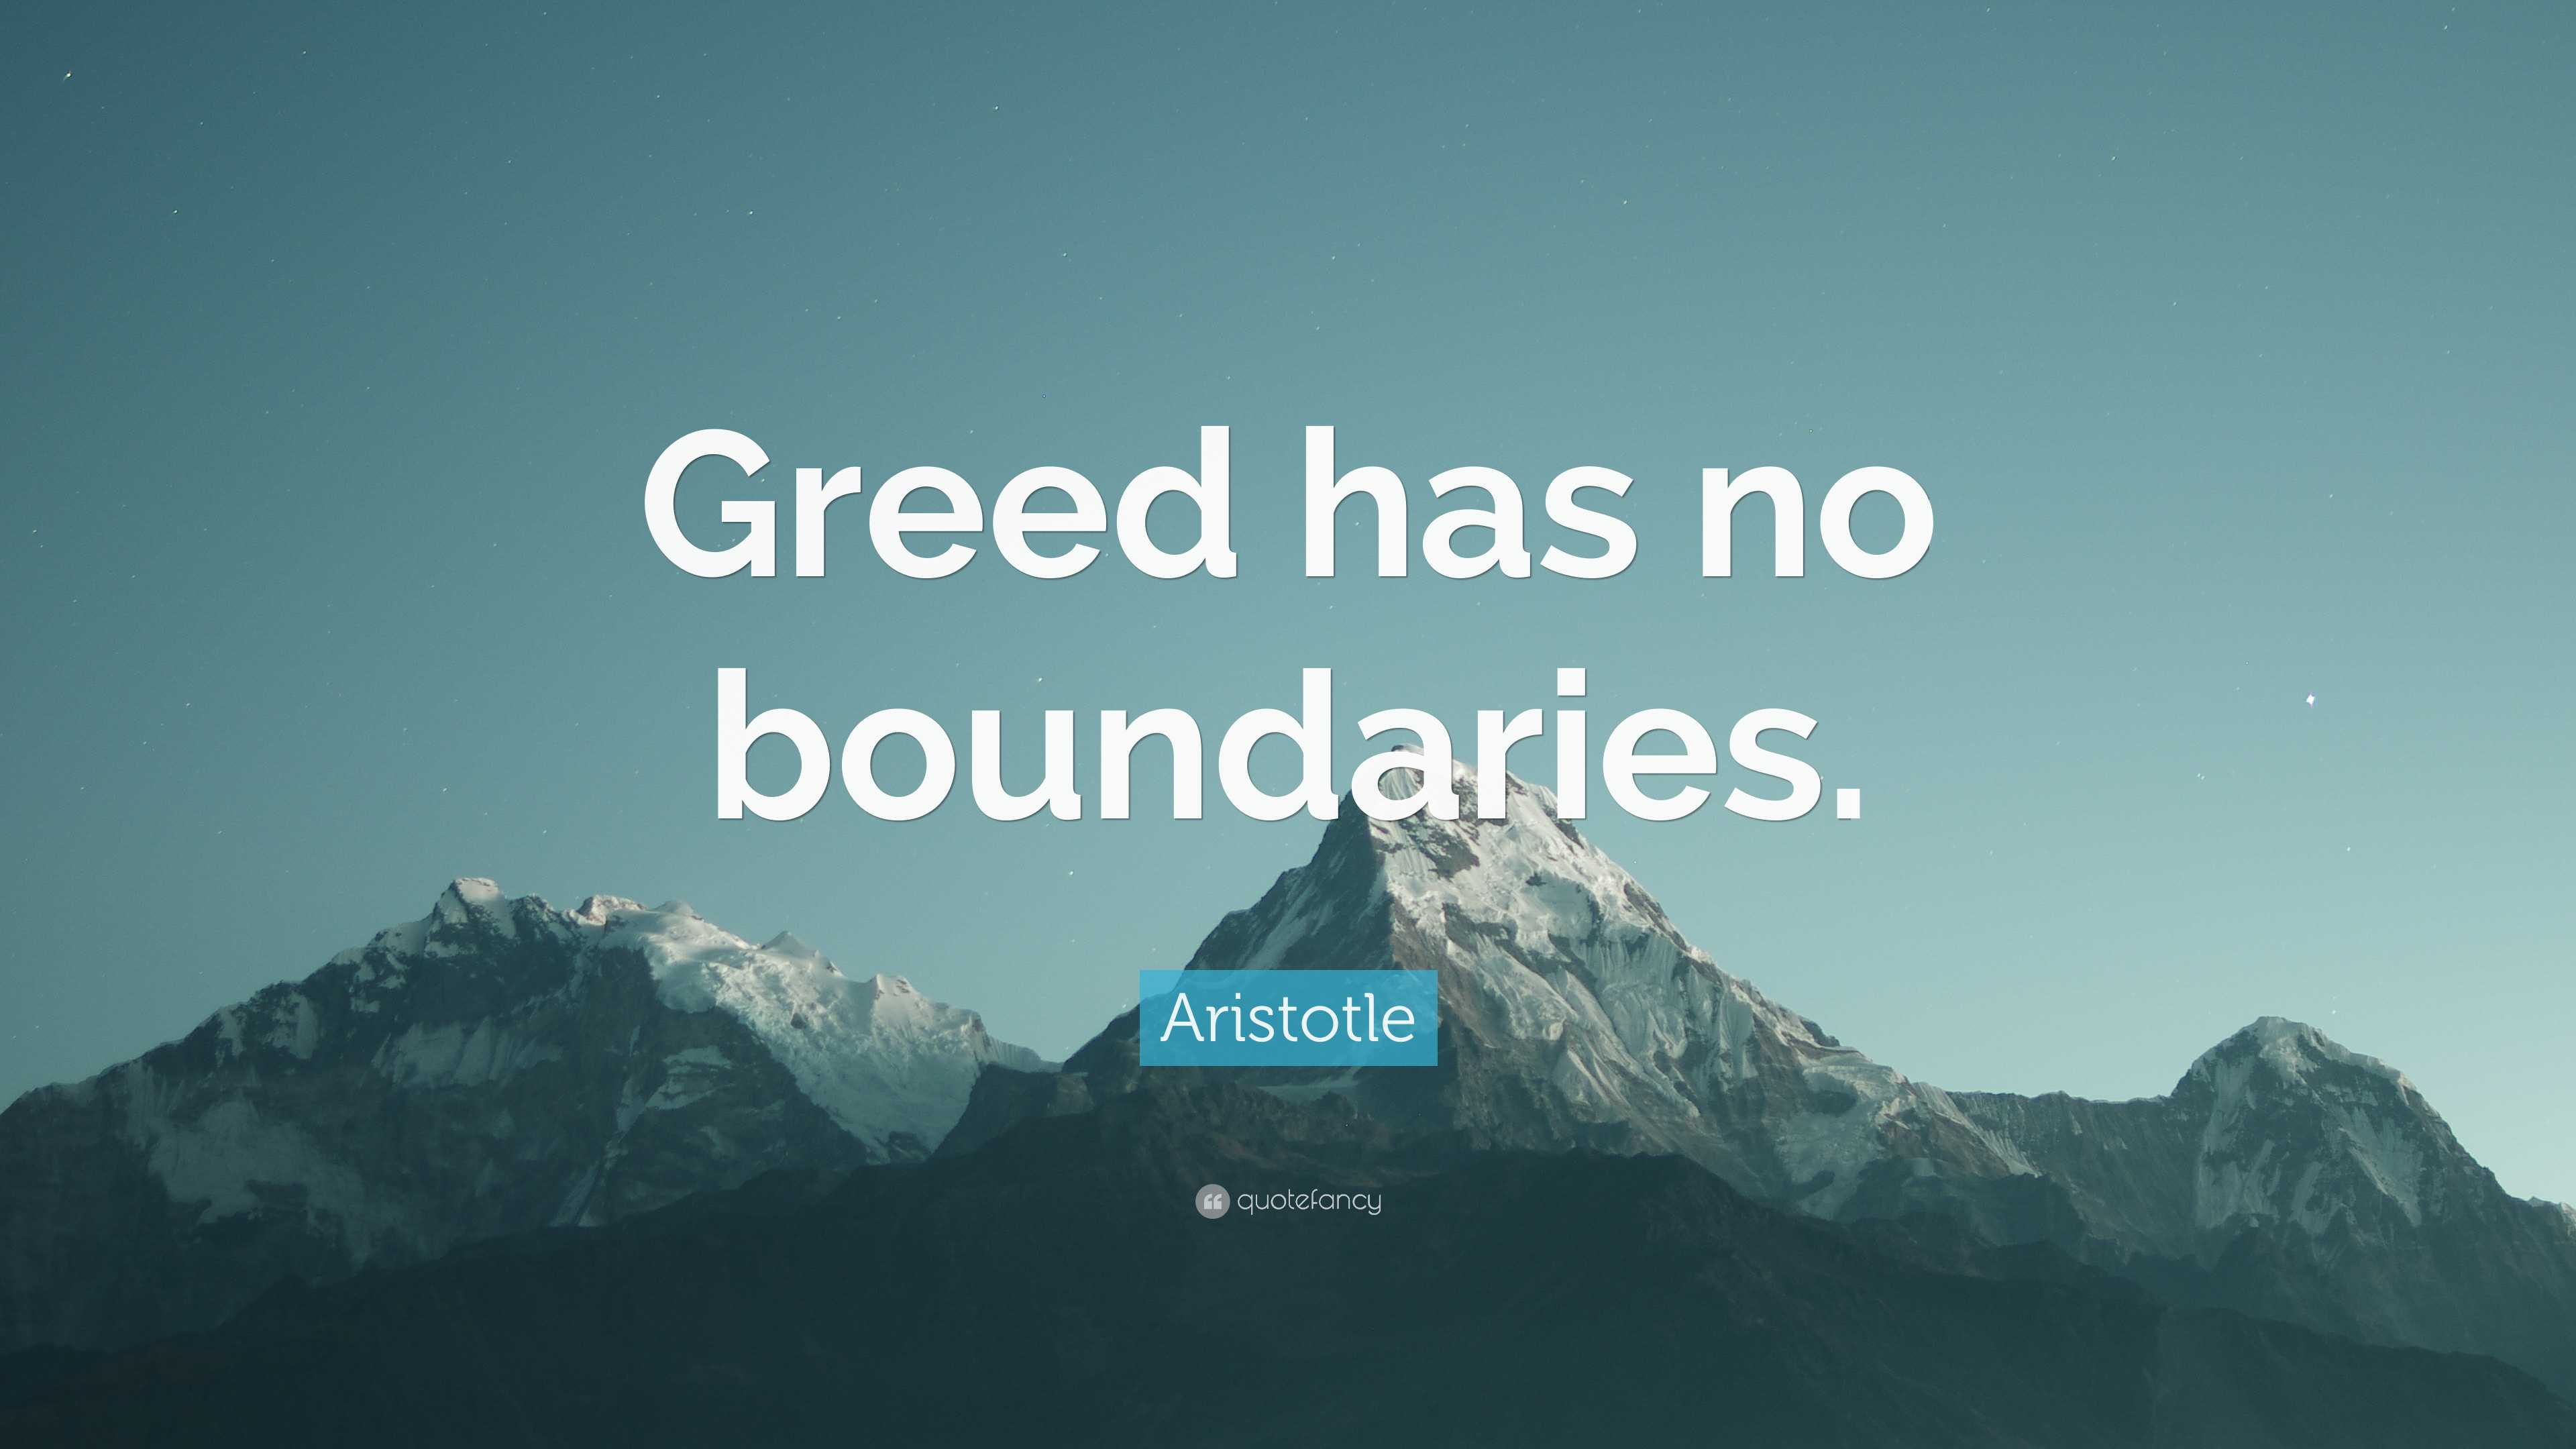 Aristotle Quote: “Greed has no boundaries.”